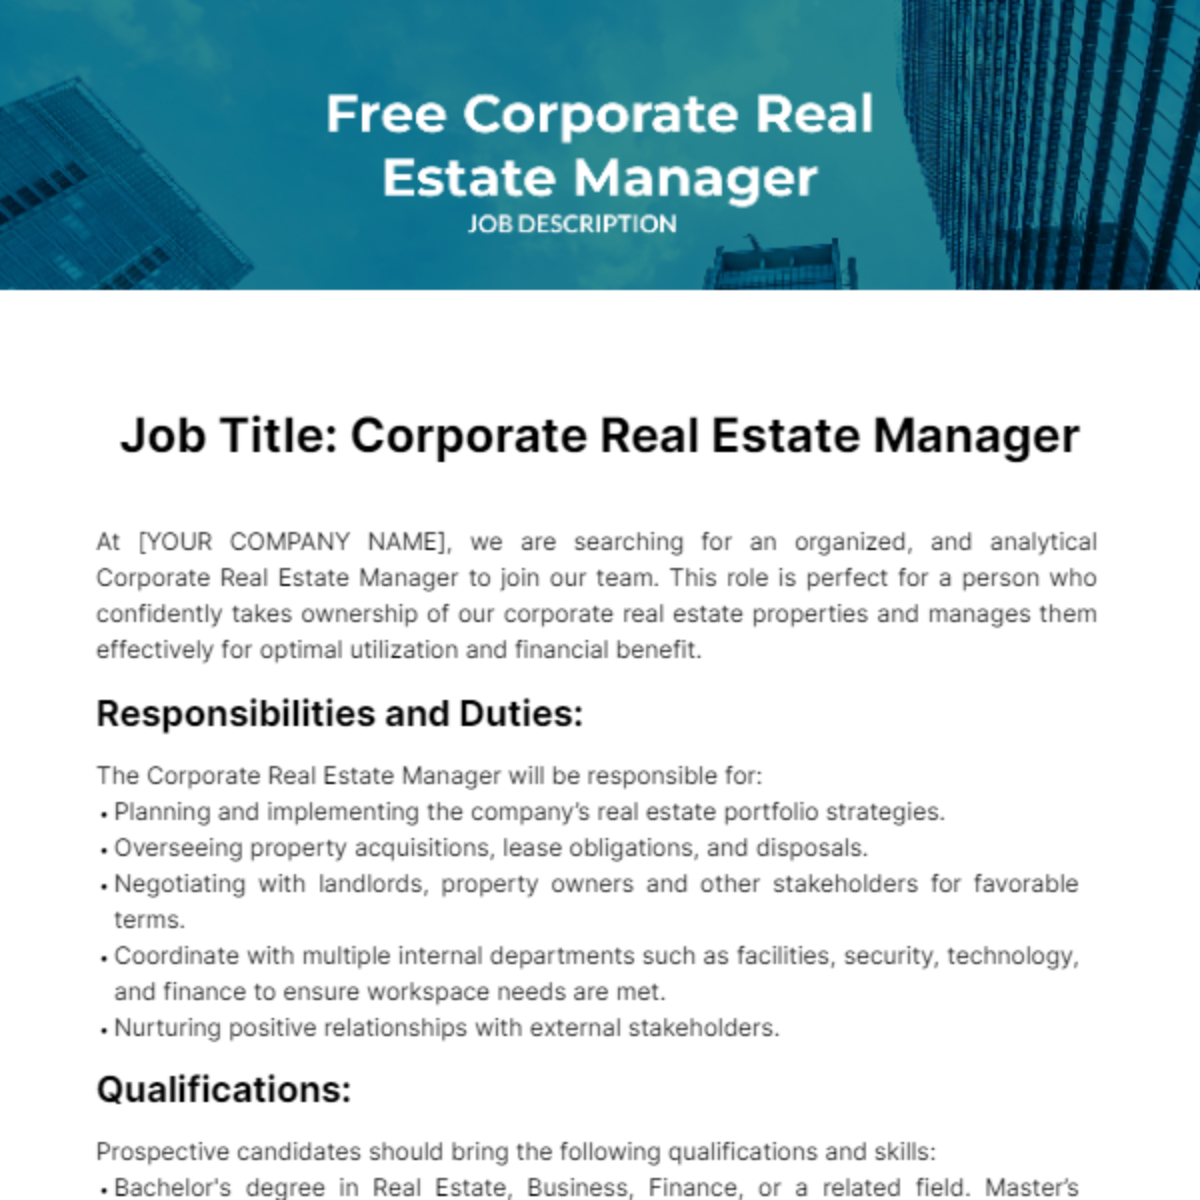 Corporate Real Estate Manager Job Description Template